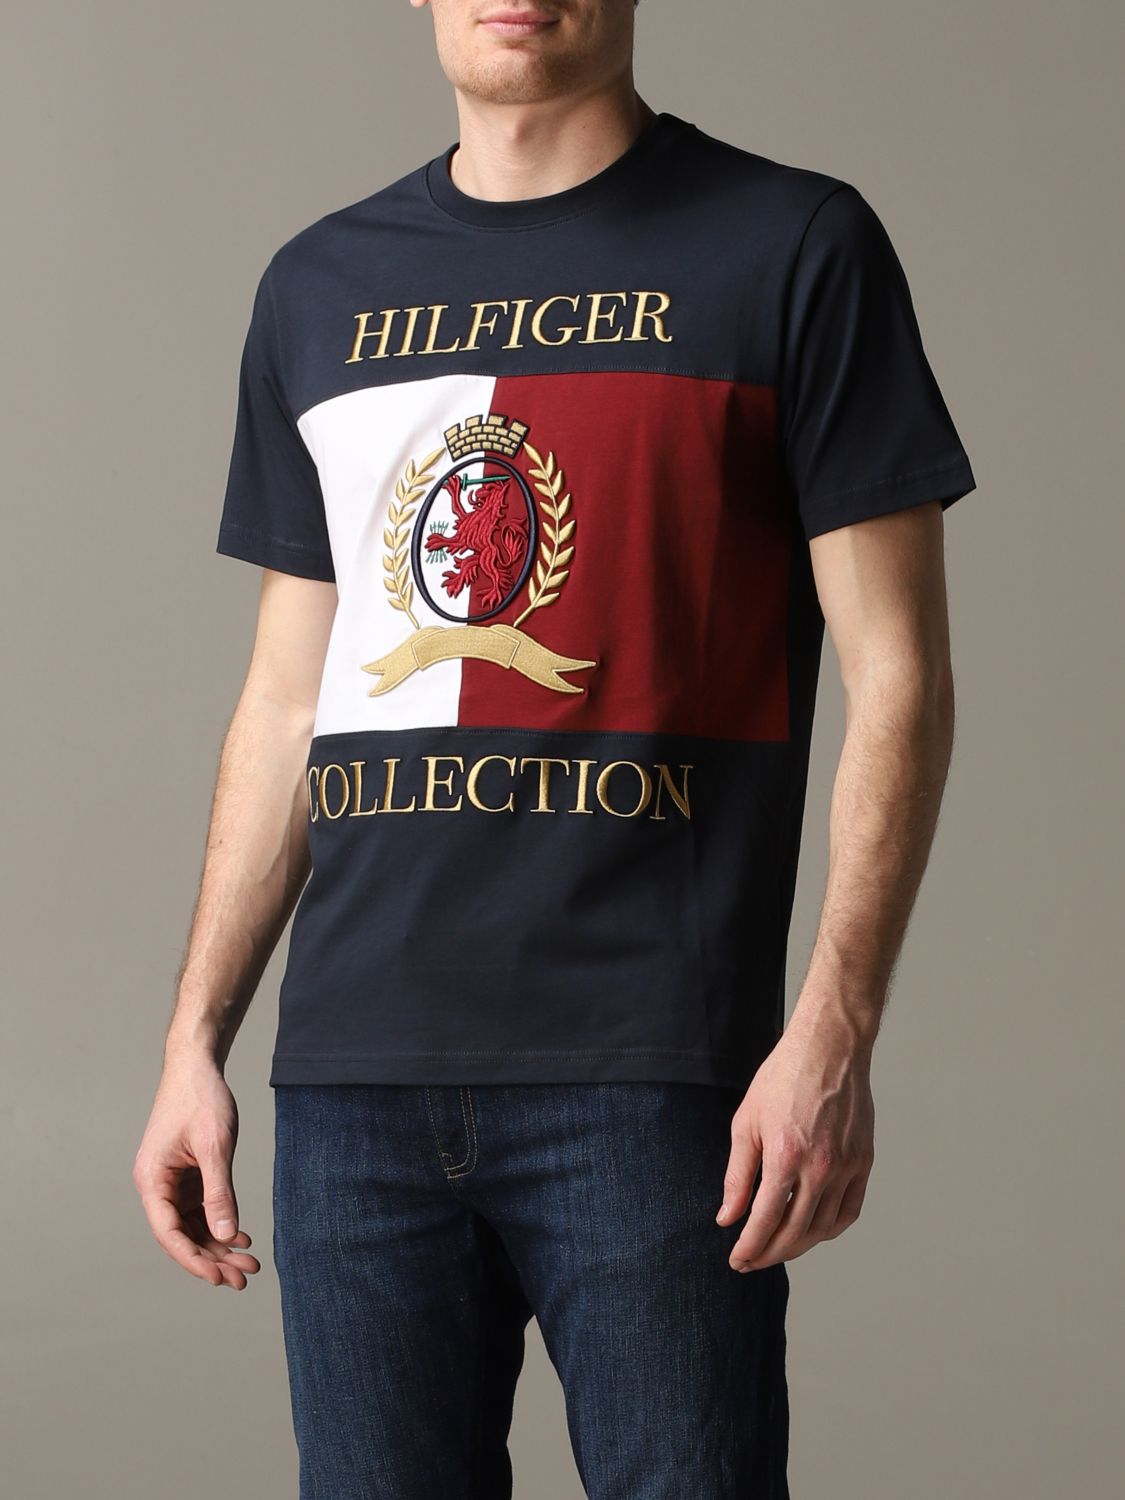 hilfiger collection mens